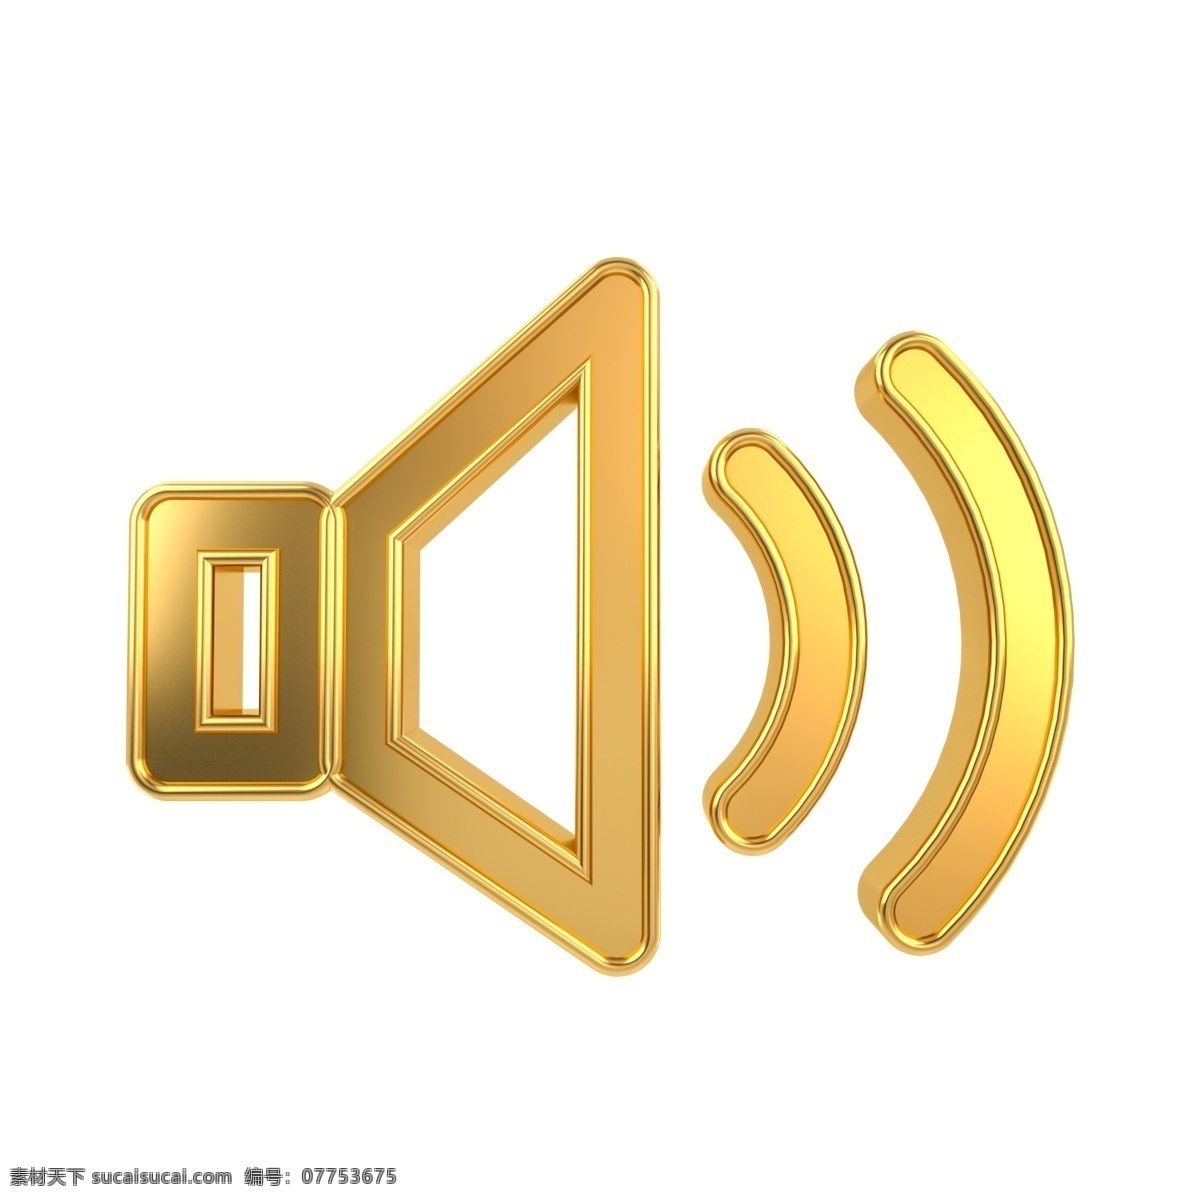 c4d 金属 立体 声音 图标 3d 金属质感 金色 网页ui 网页设计 常用 声音图标 喇叭